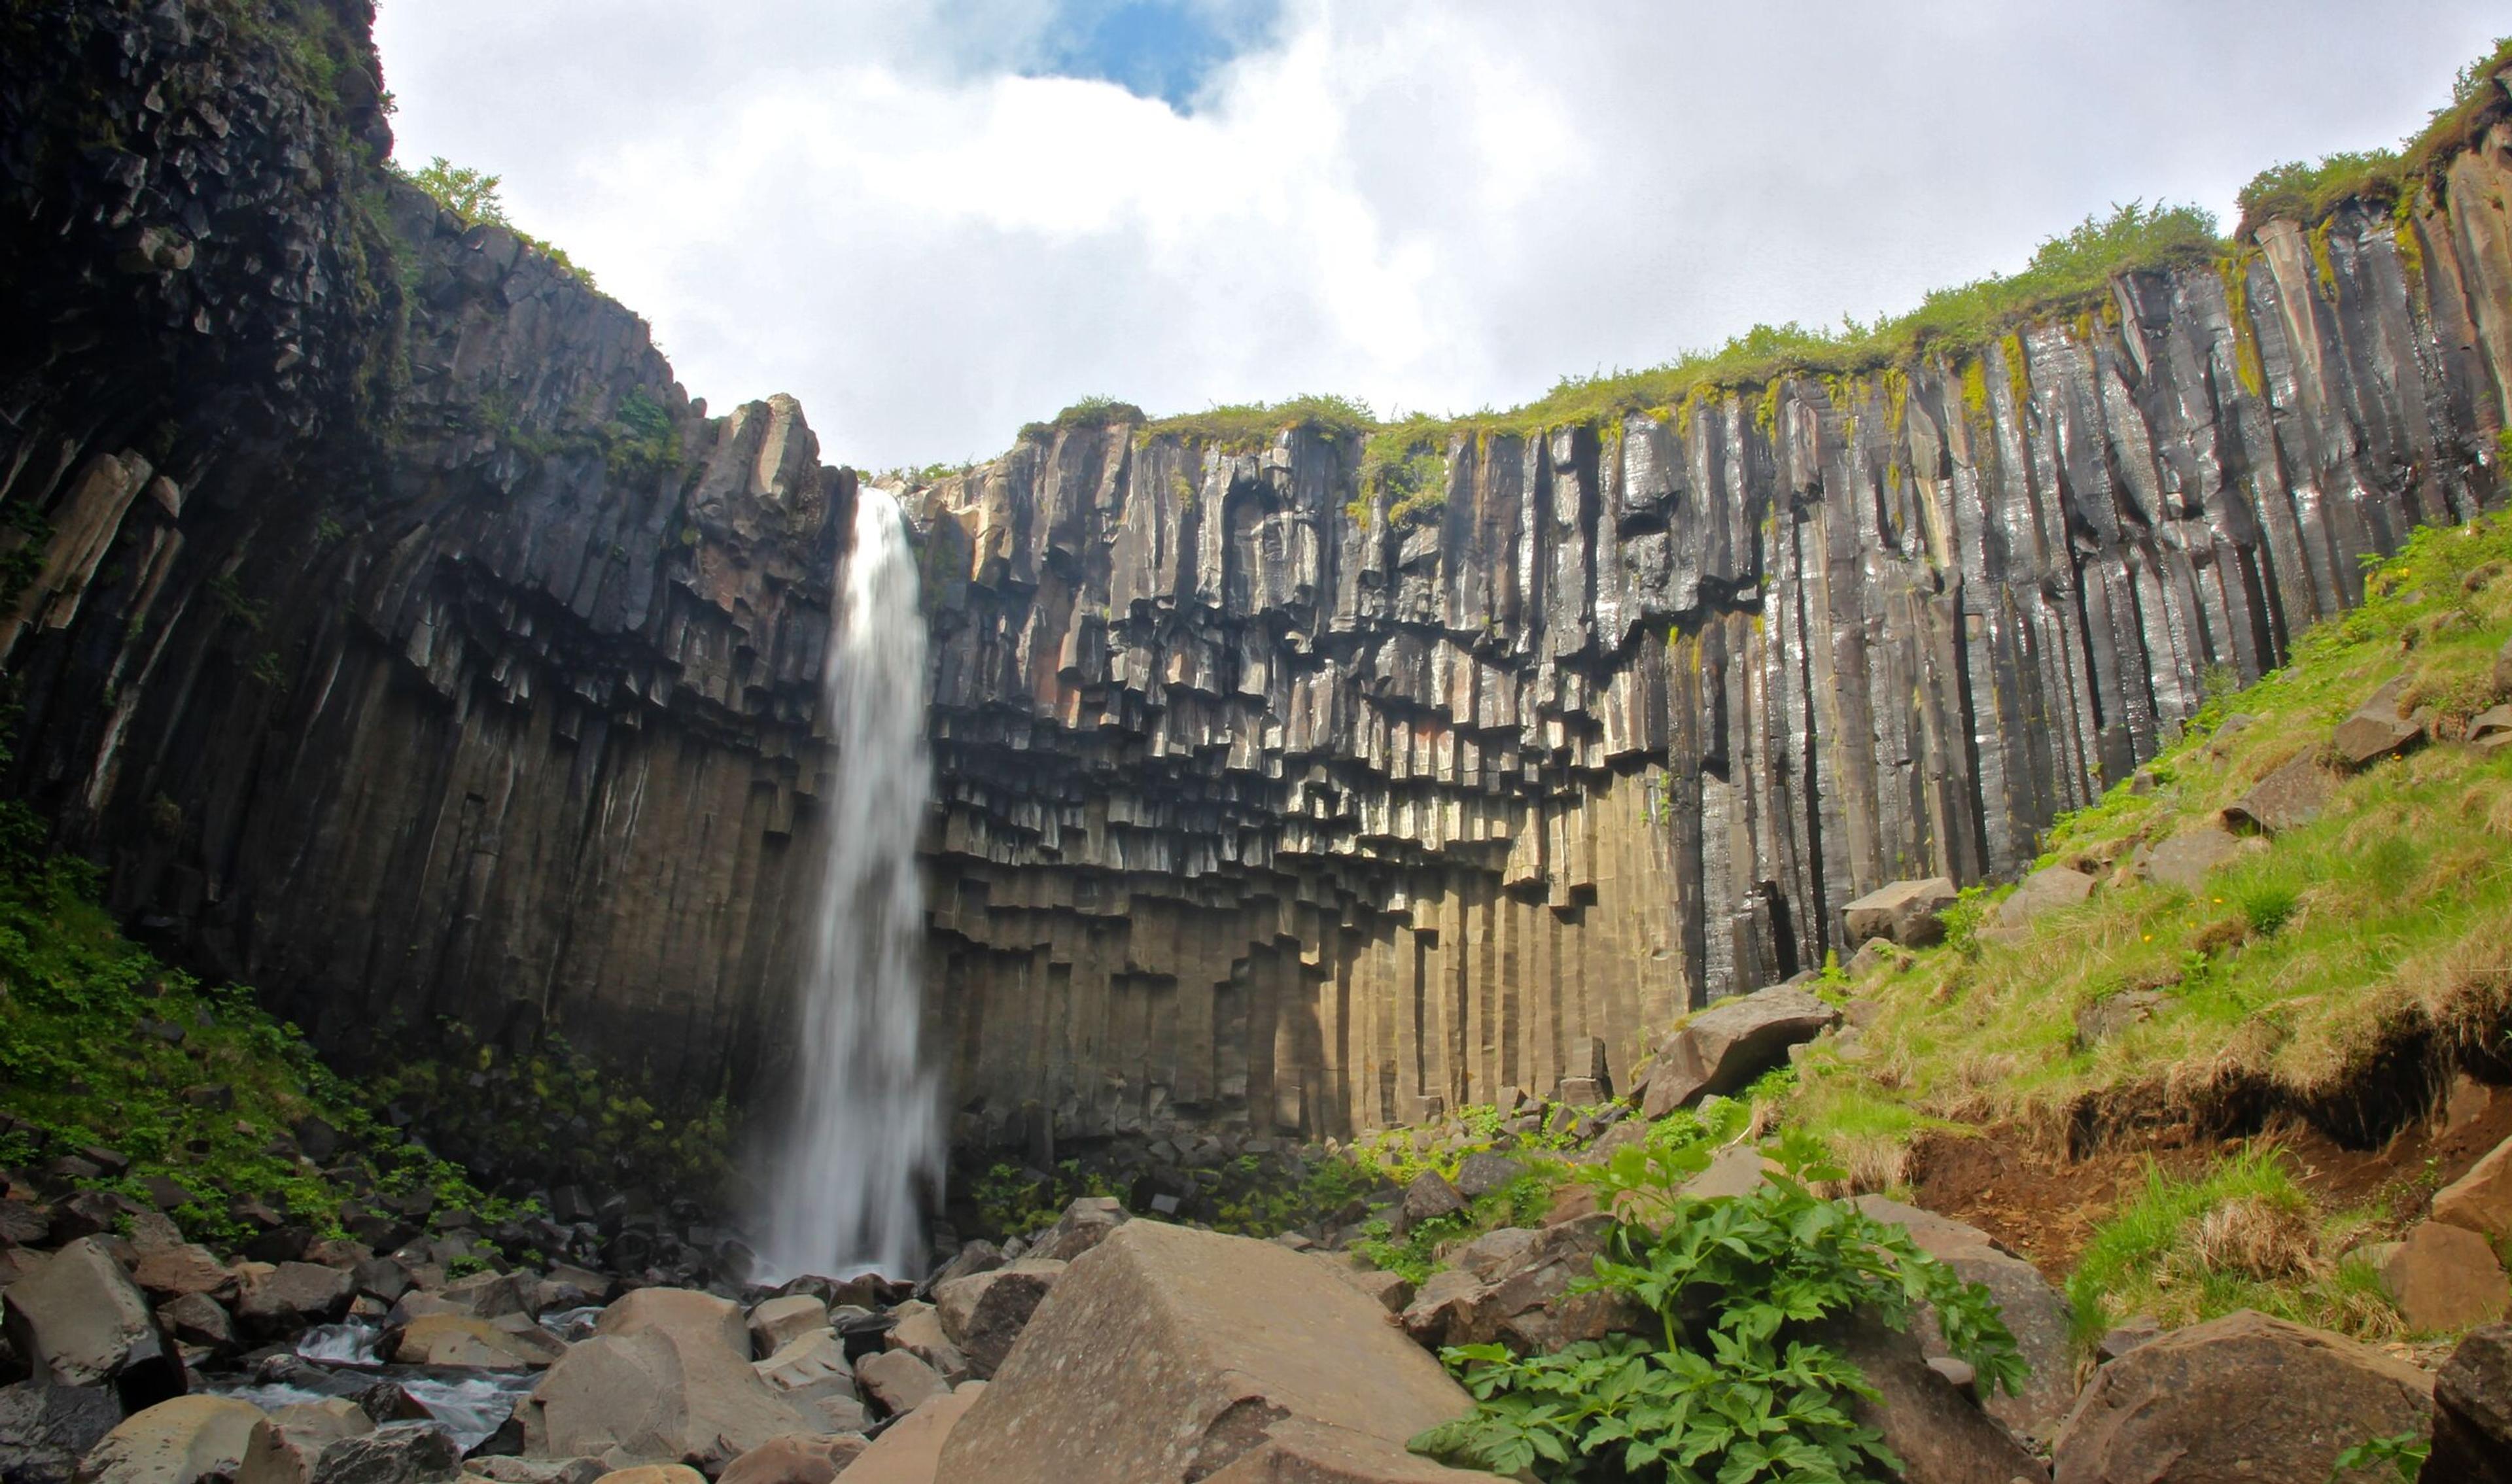 Waterfall framed by tall basalt columns and green vegetation